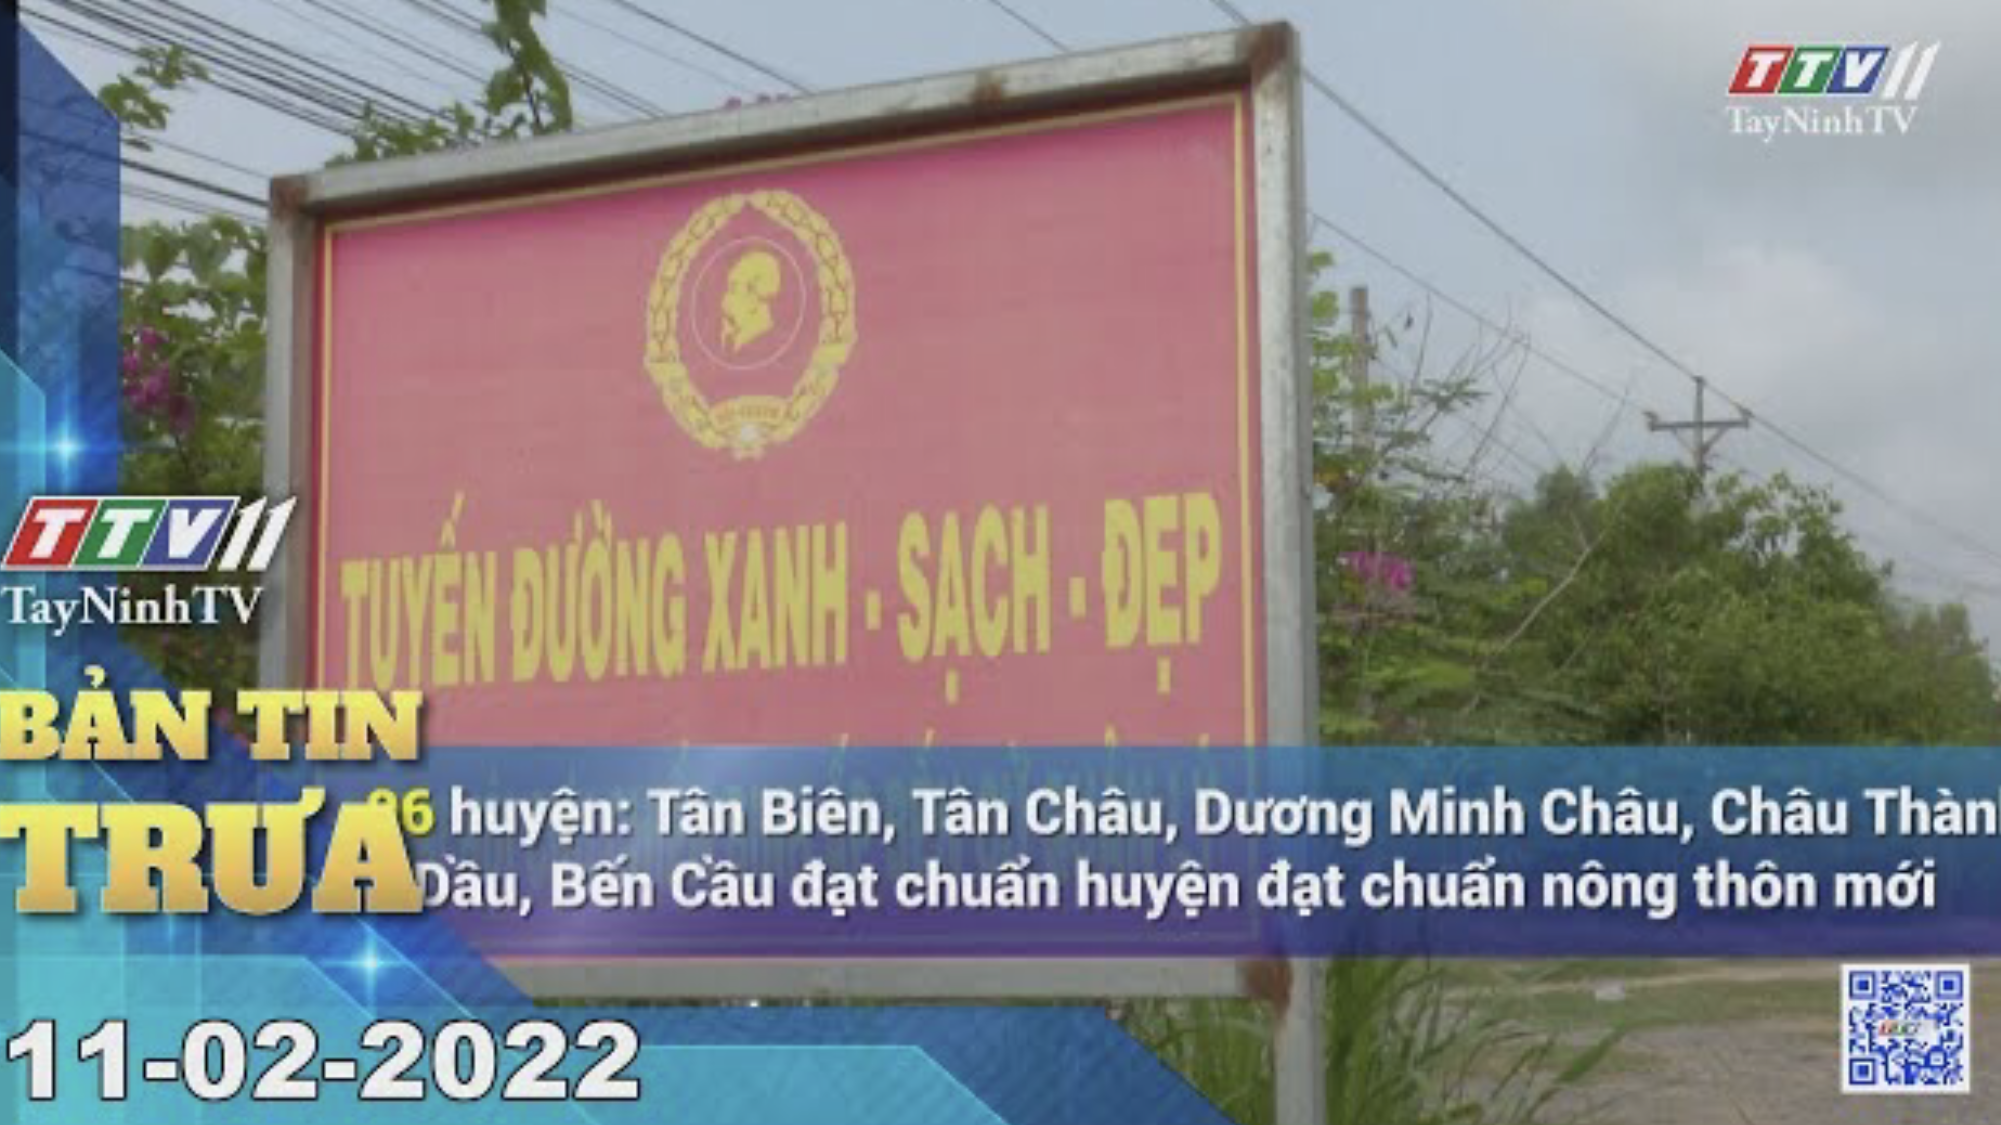 Bản tin trưa 11-02-2022 | Tin tức hôm nay | TayNinhTV